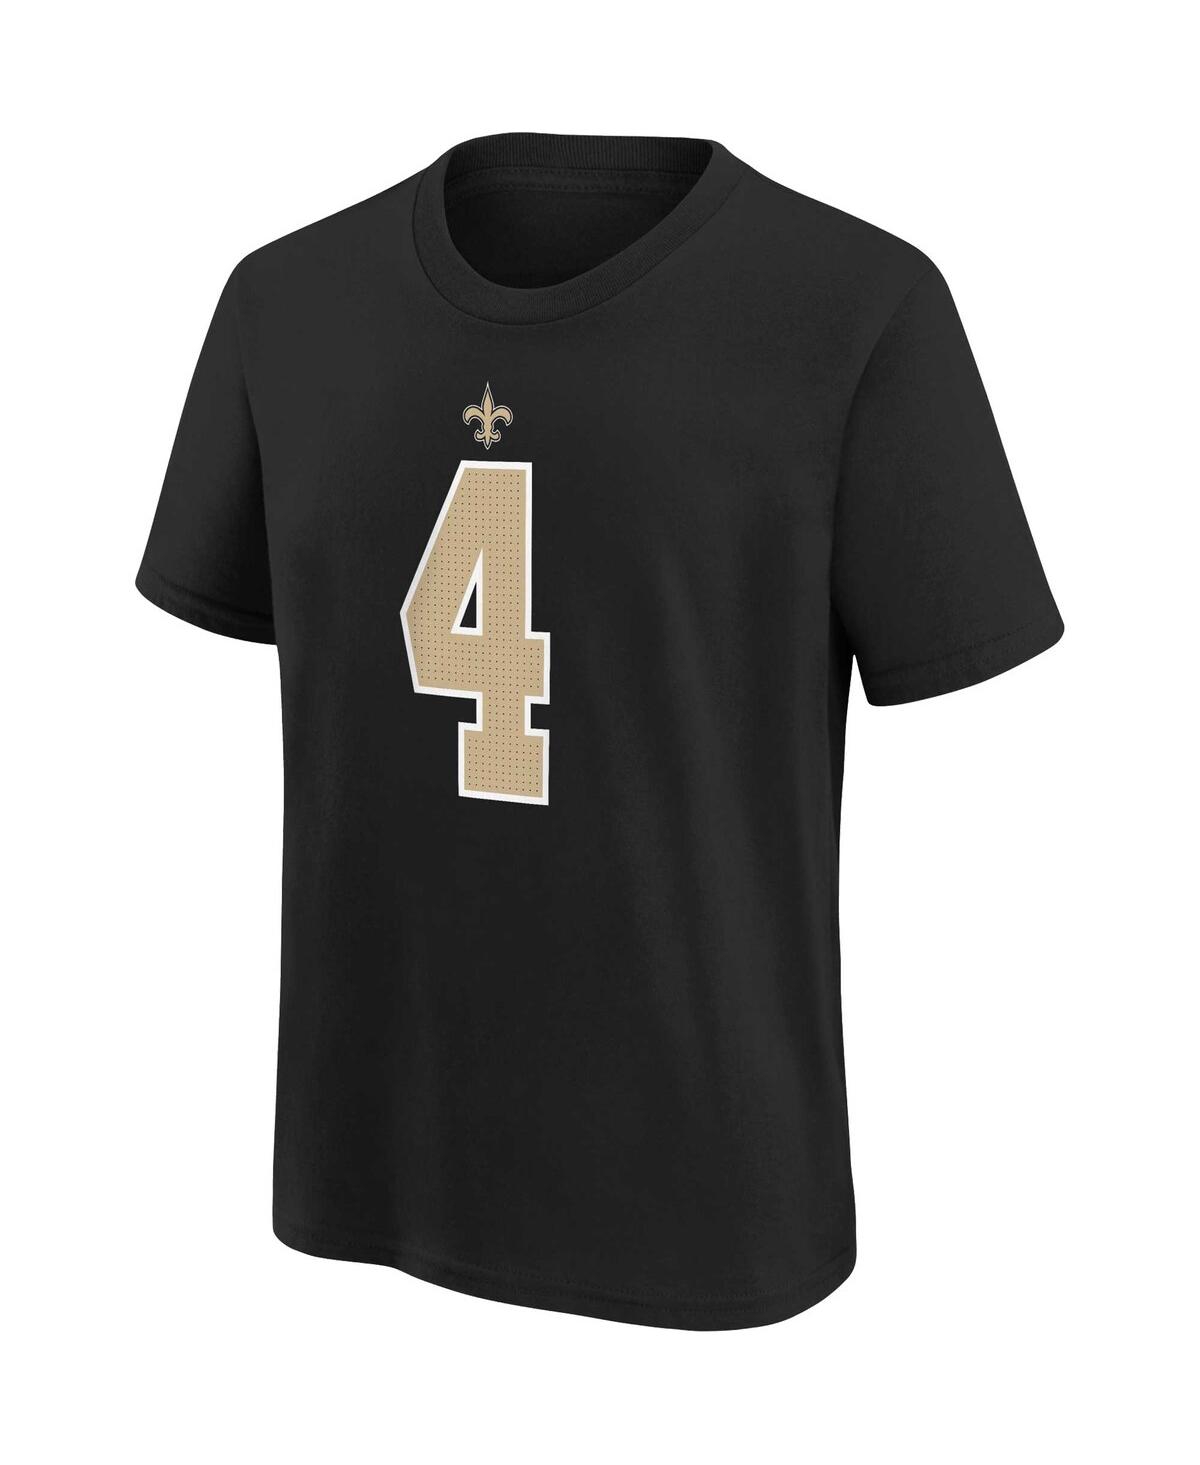 Shop Nike Big Boys  Derek Carr Black New Orleans Saints Player Name And Number T-shirt